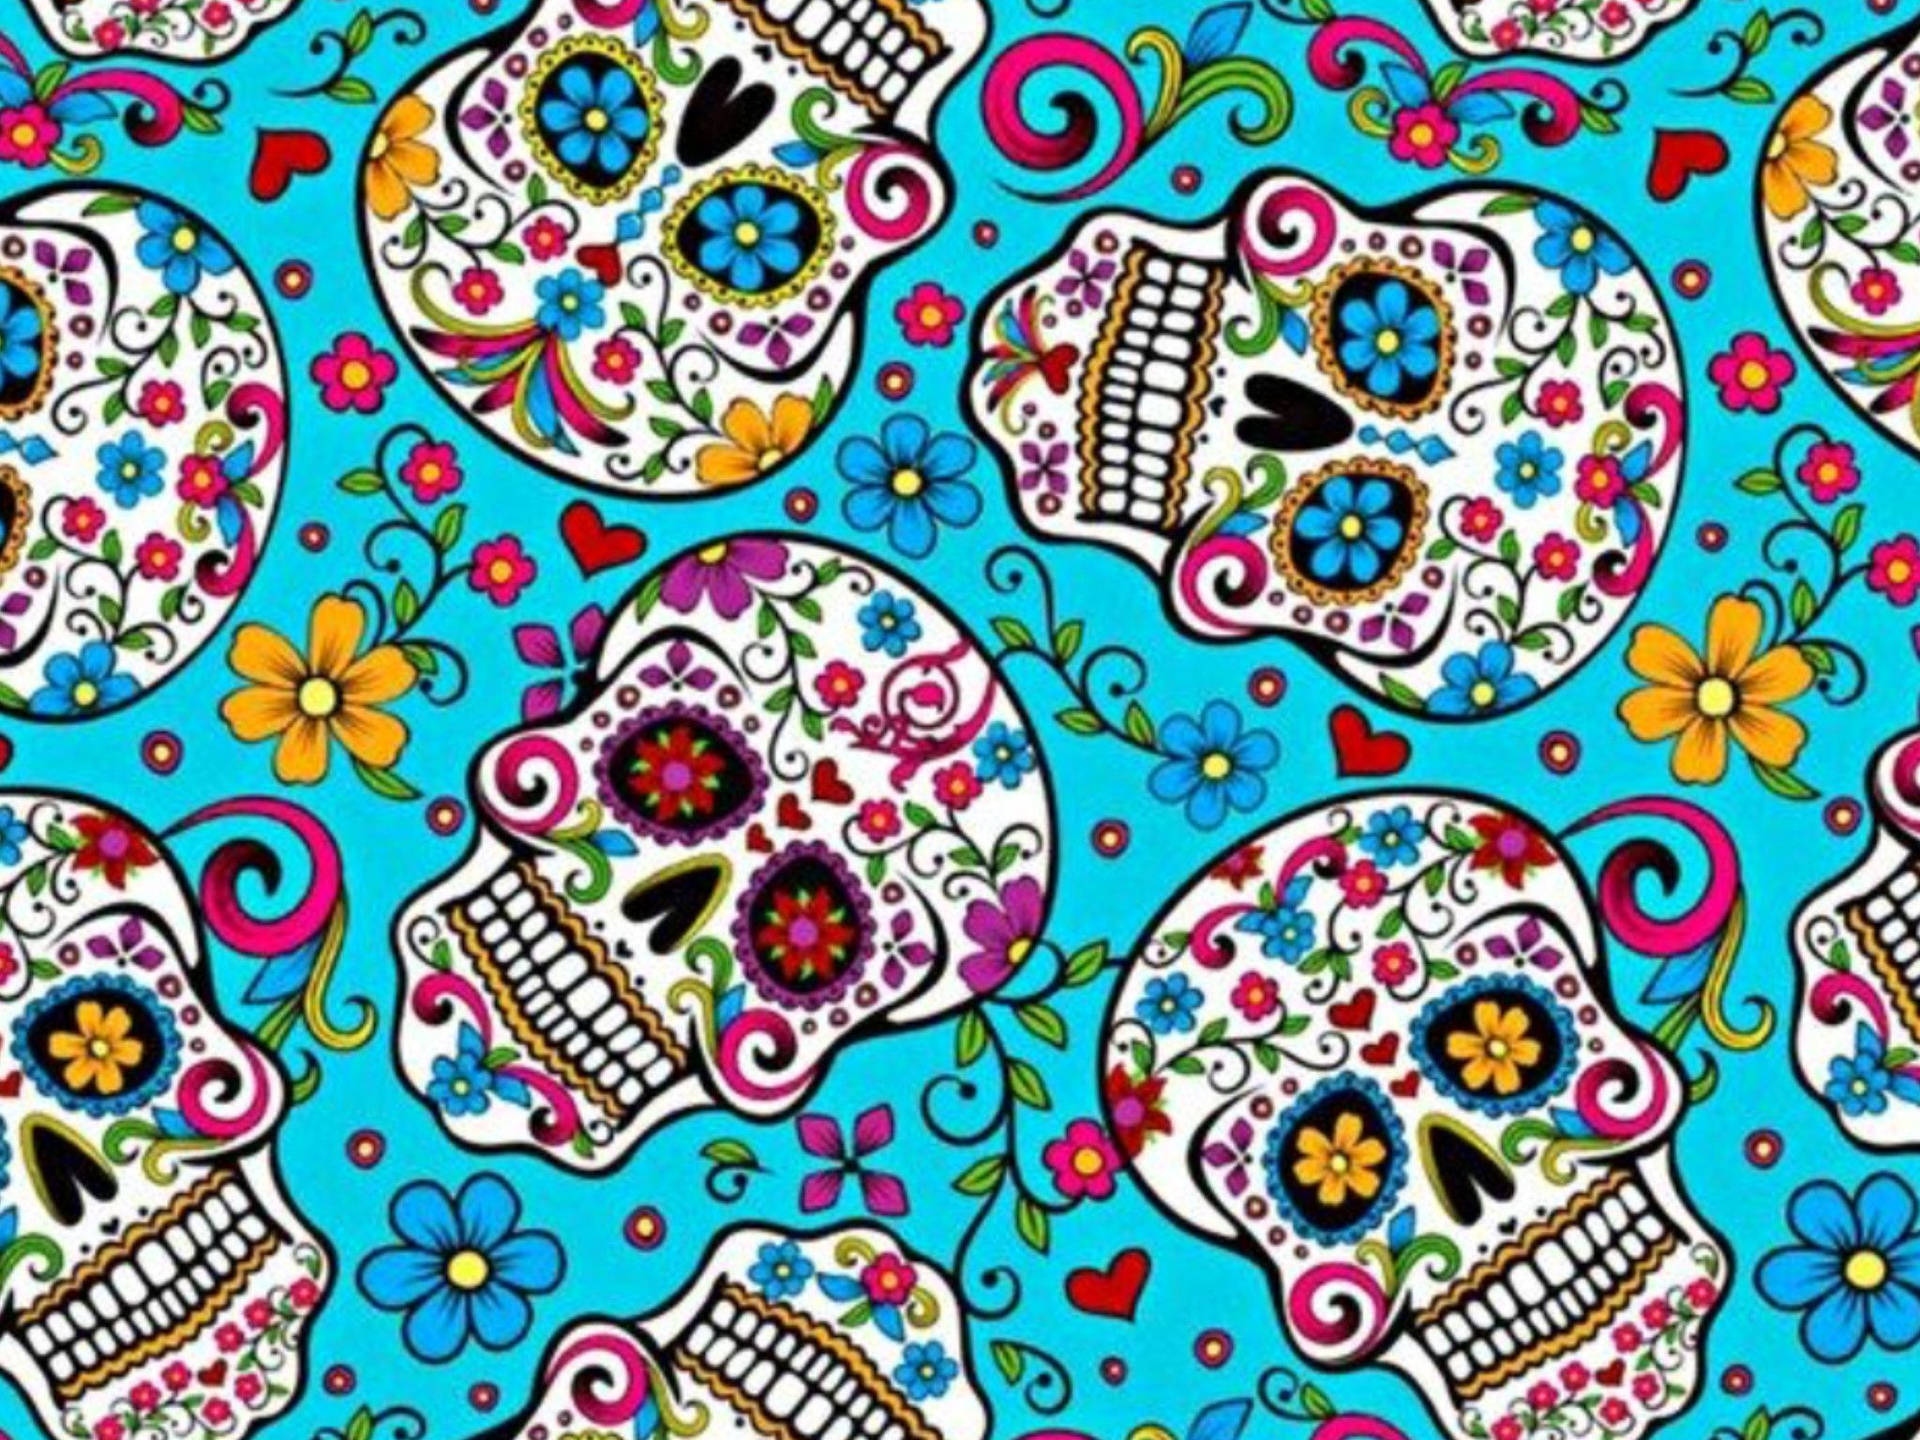 Colorful Skull Wallpaper